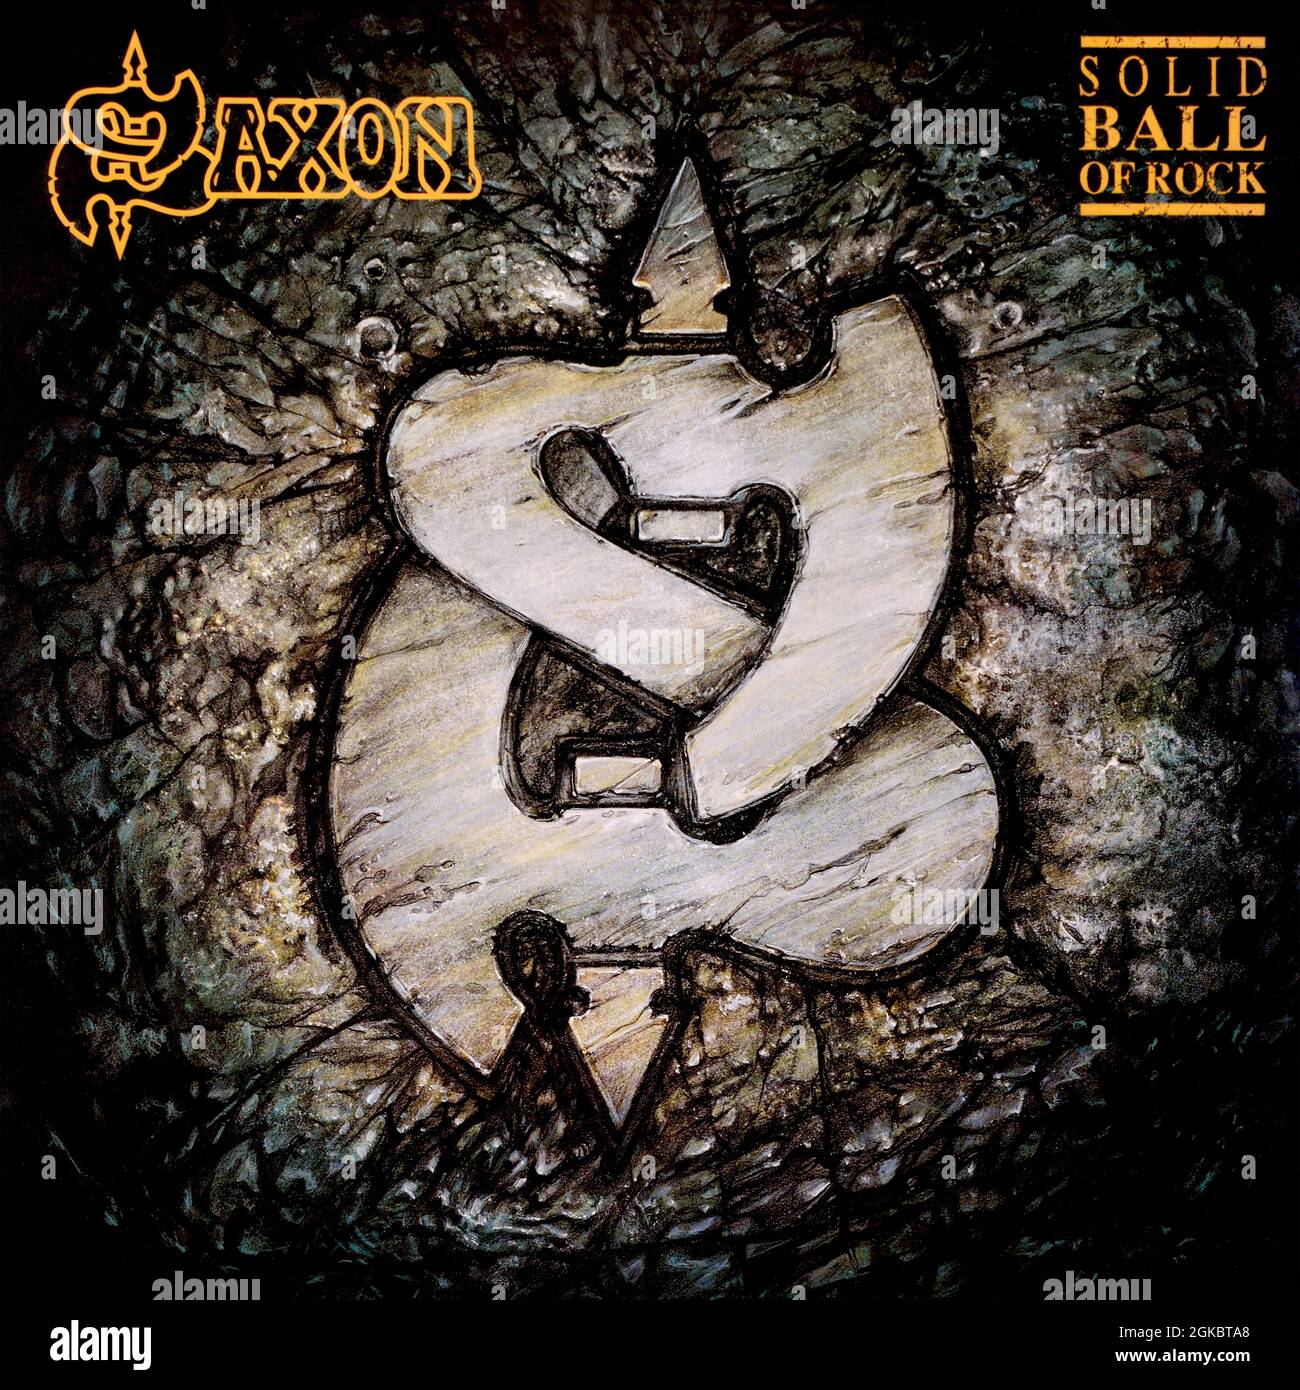 Saxon - original vinyl album cover - Solid Ball Of Rock - 1990 Stock Photo